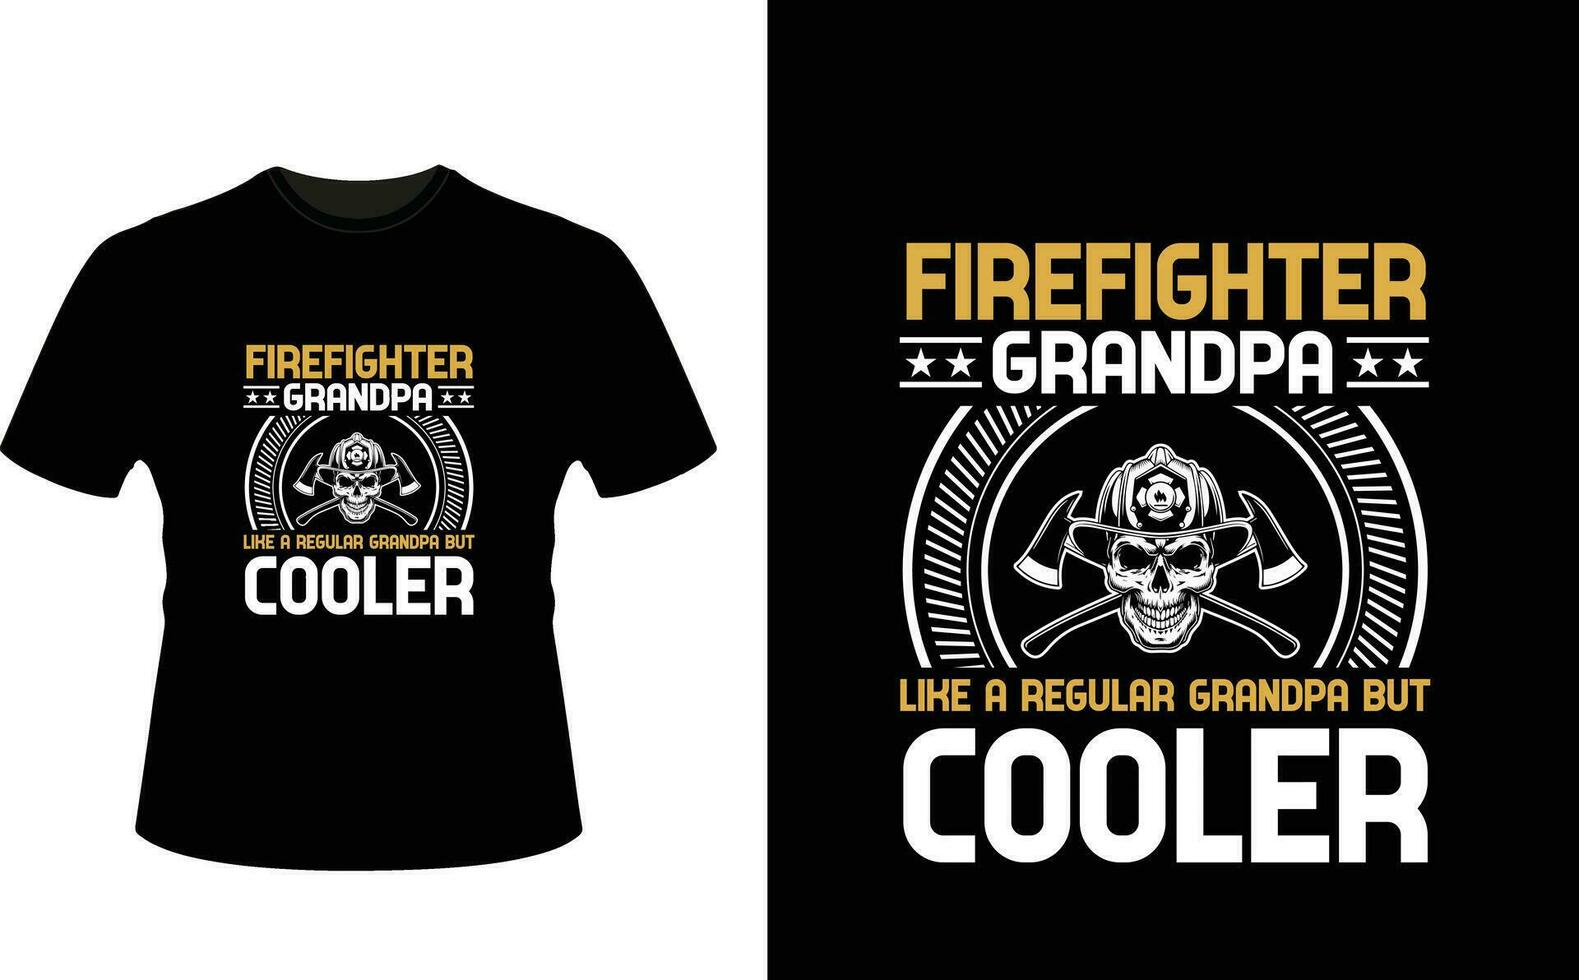 Firefighter Grandpa Like a Regular Grandpa But Cooler or Grandfather tshirt design or Grandfather day t shirt Design vector